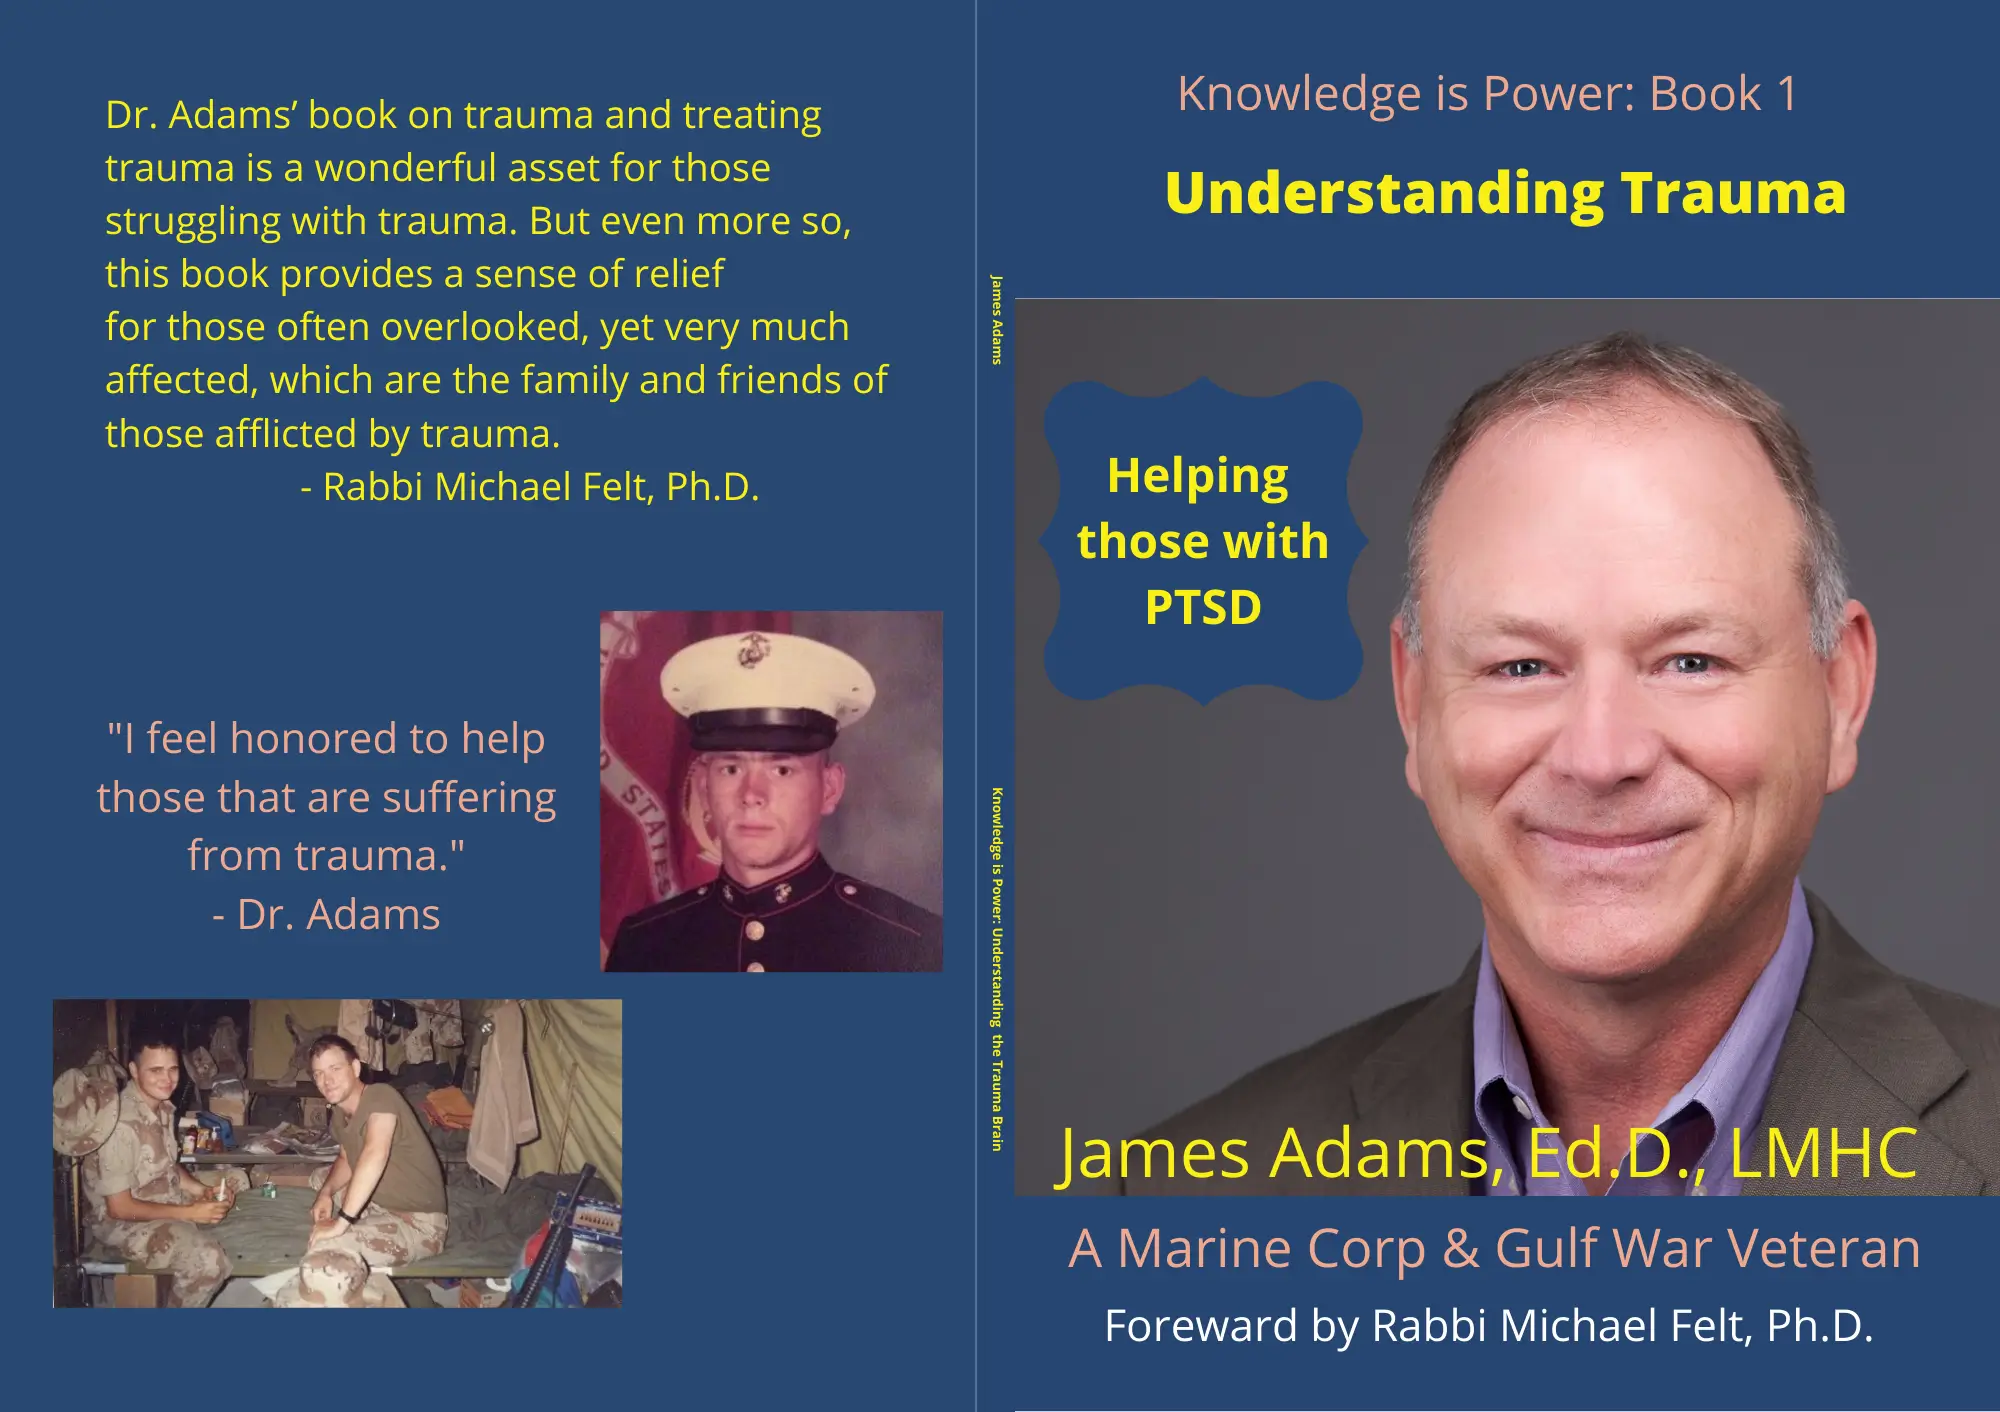 Understanding Trauma by Dr. Adams Book